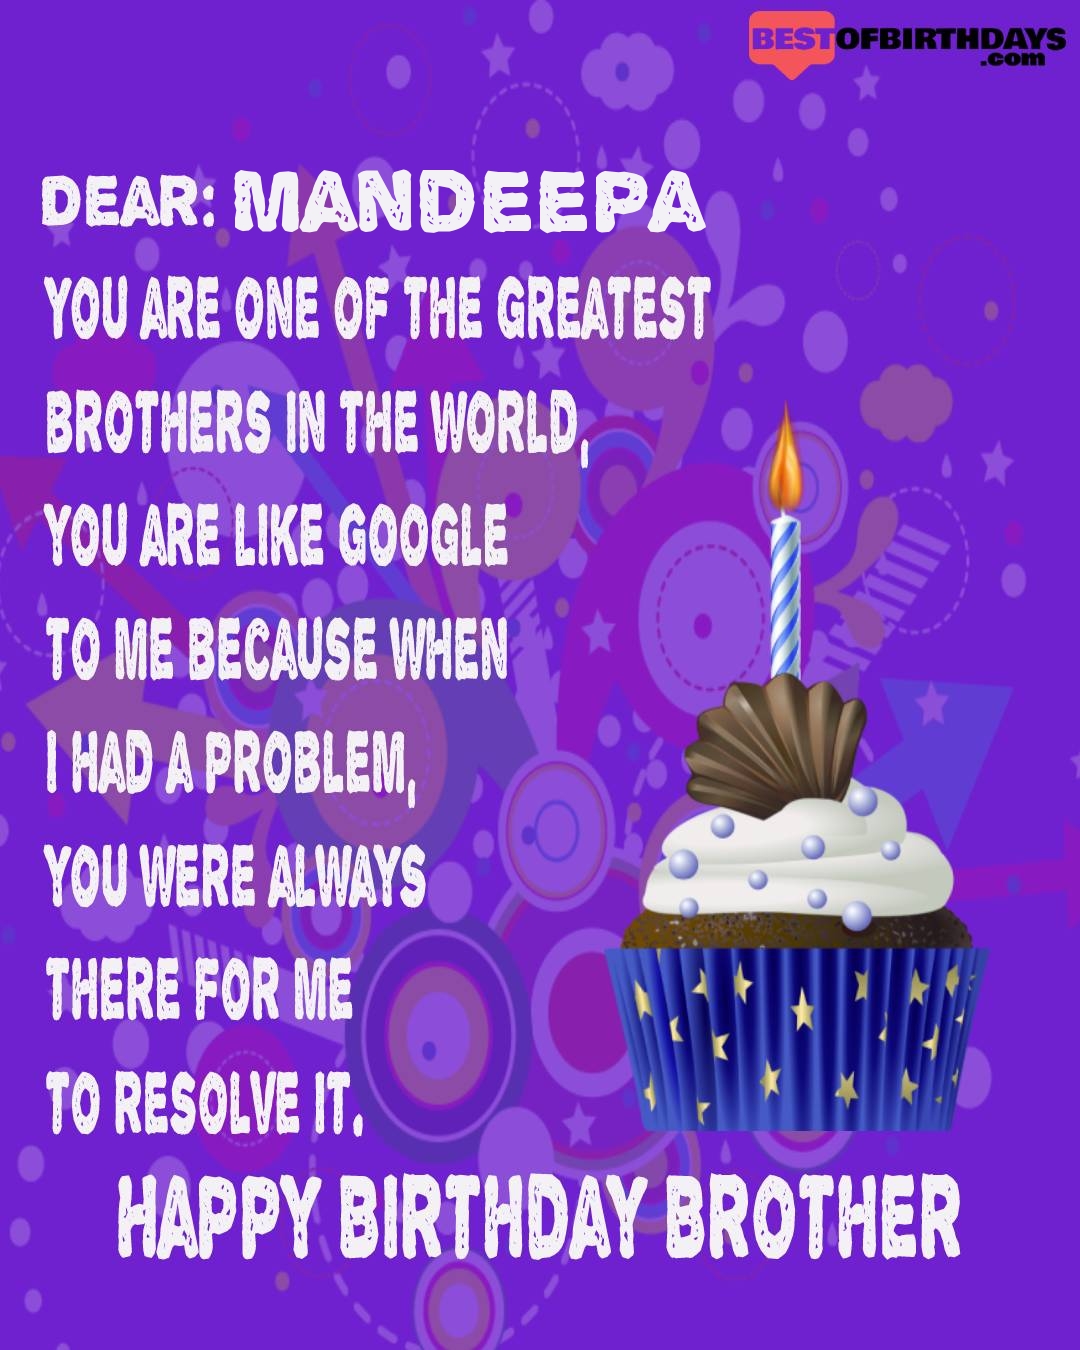 Happy birthday mandeepa bhai brother bro